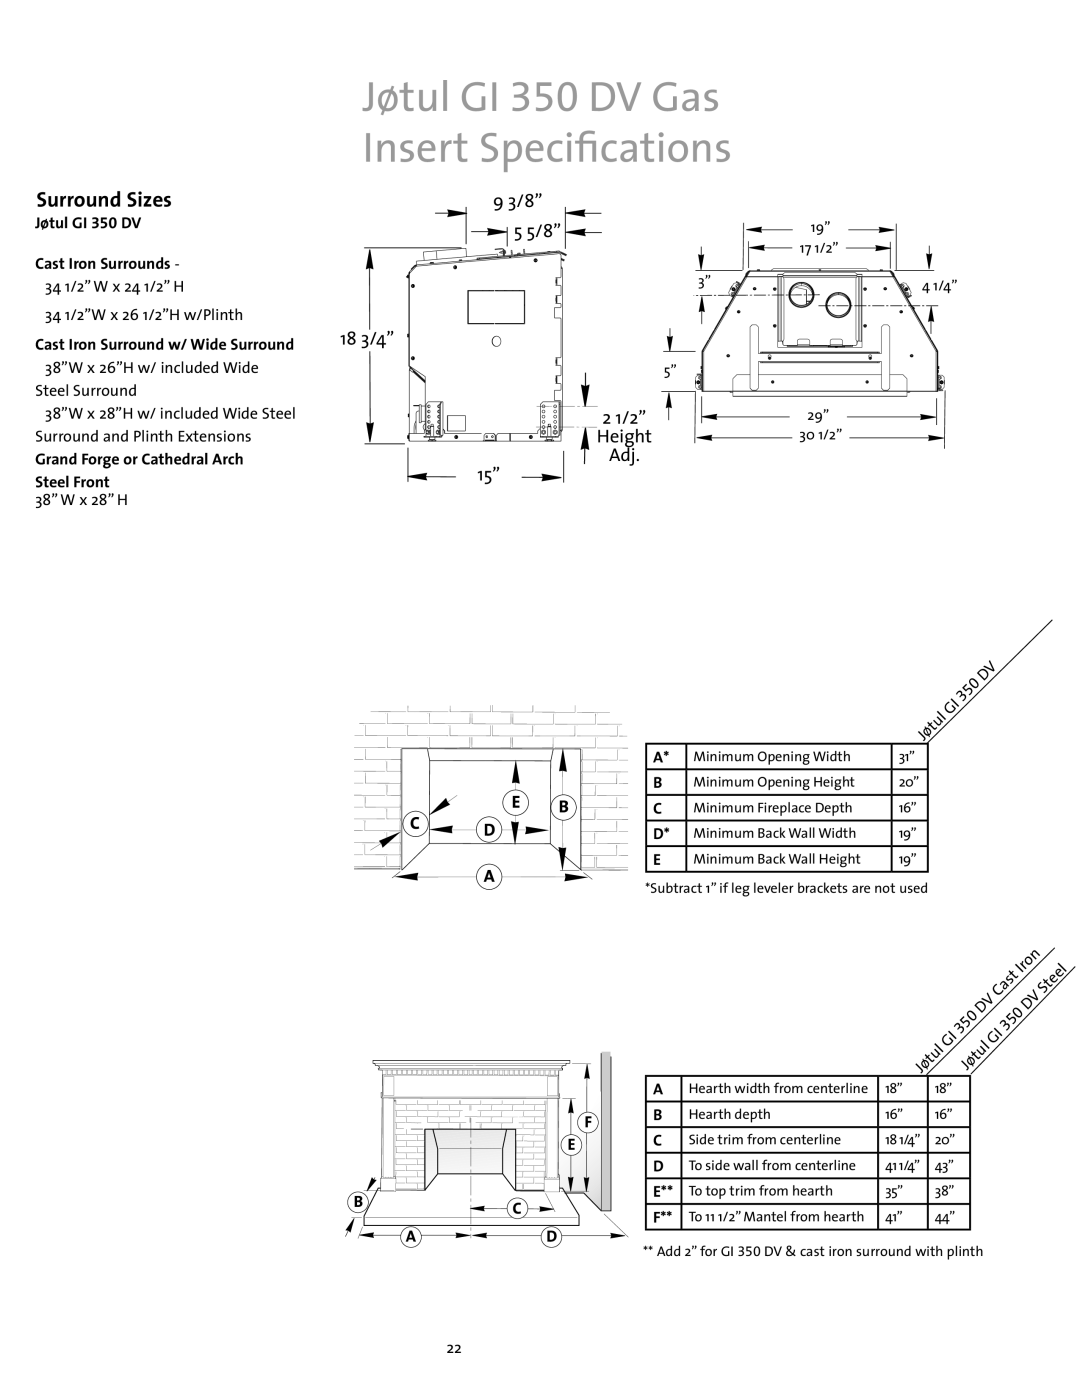 Jotul Gas Inserts and Fireplaces brochure Jøtul GI 350 DV Gas Insert Specifications, Surround Sizes, 34 1/2” W x 24 1/2” H 